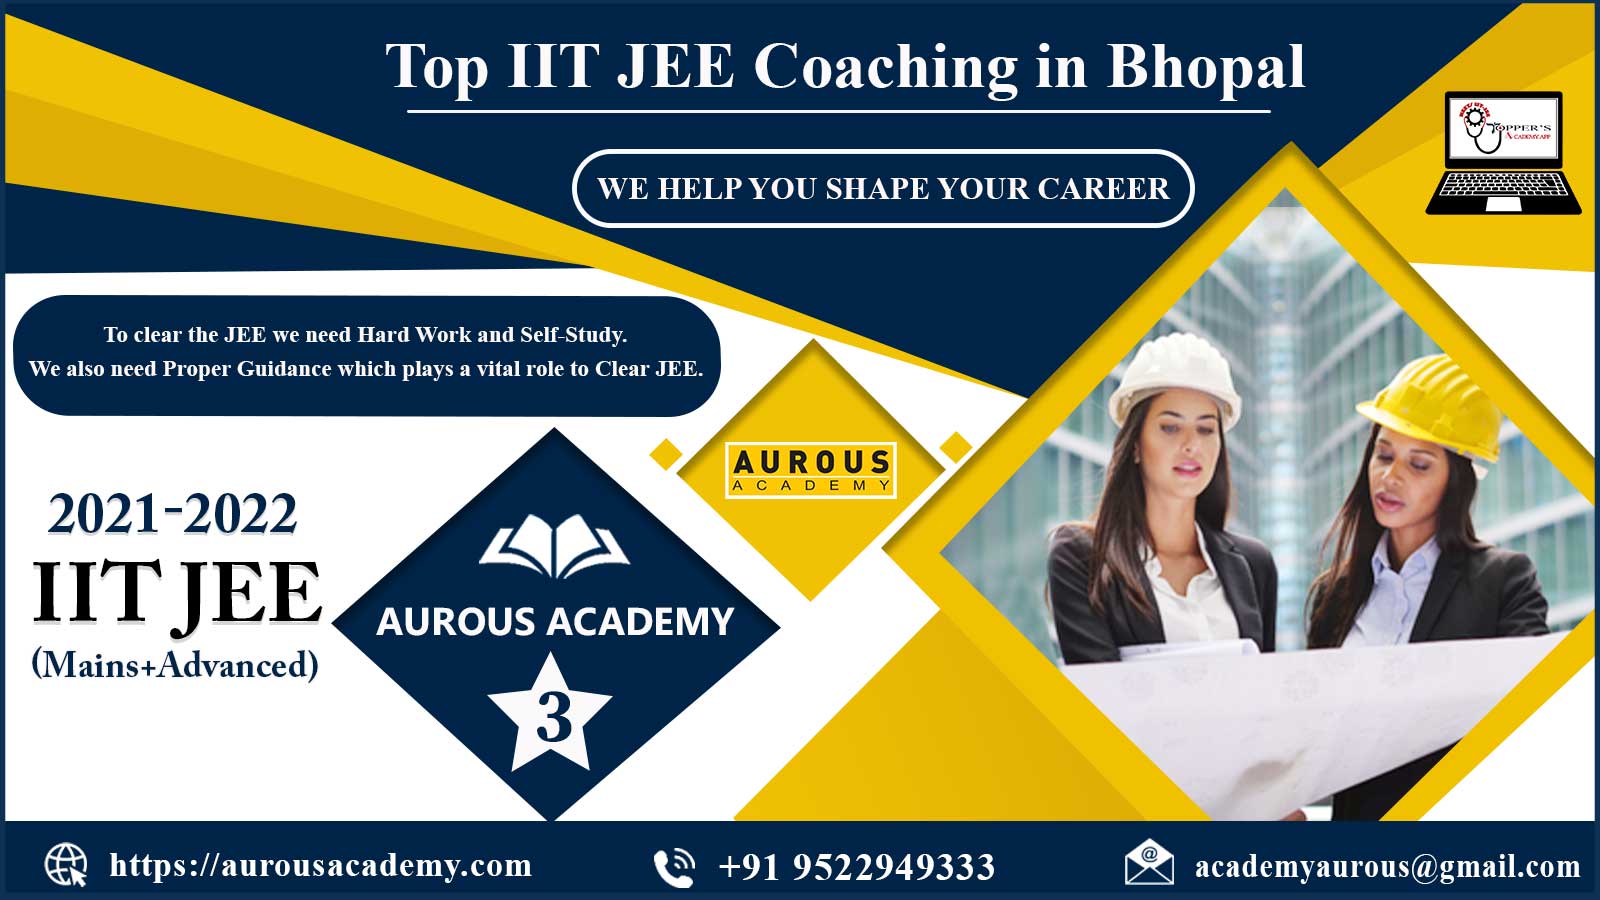 Aurous Academy IIT JEE Coaching in Bhopal